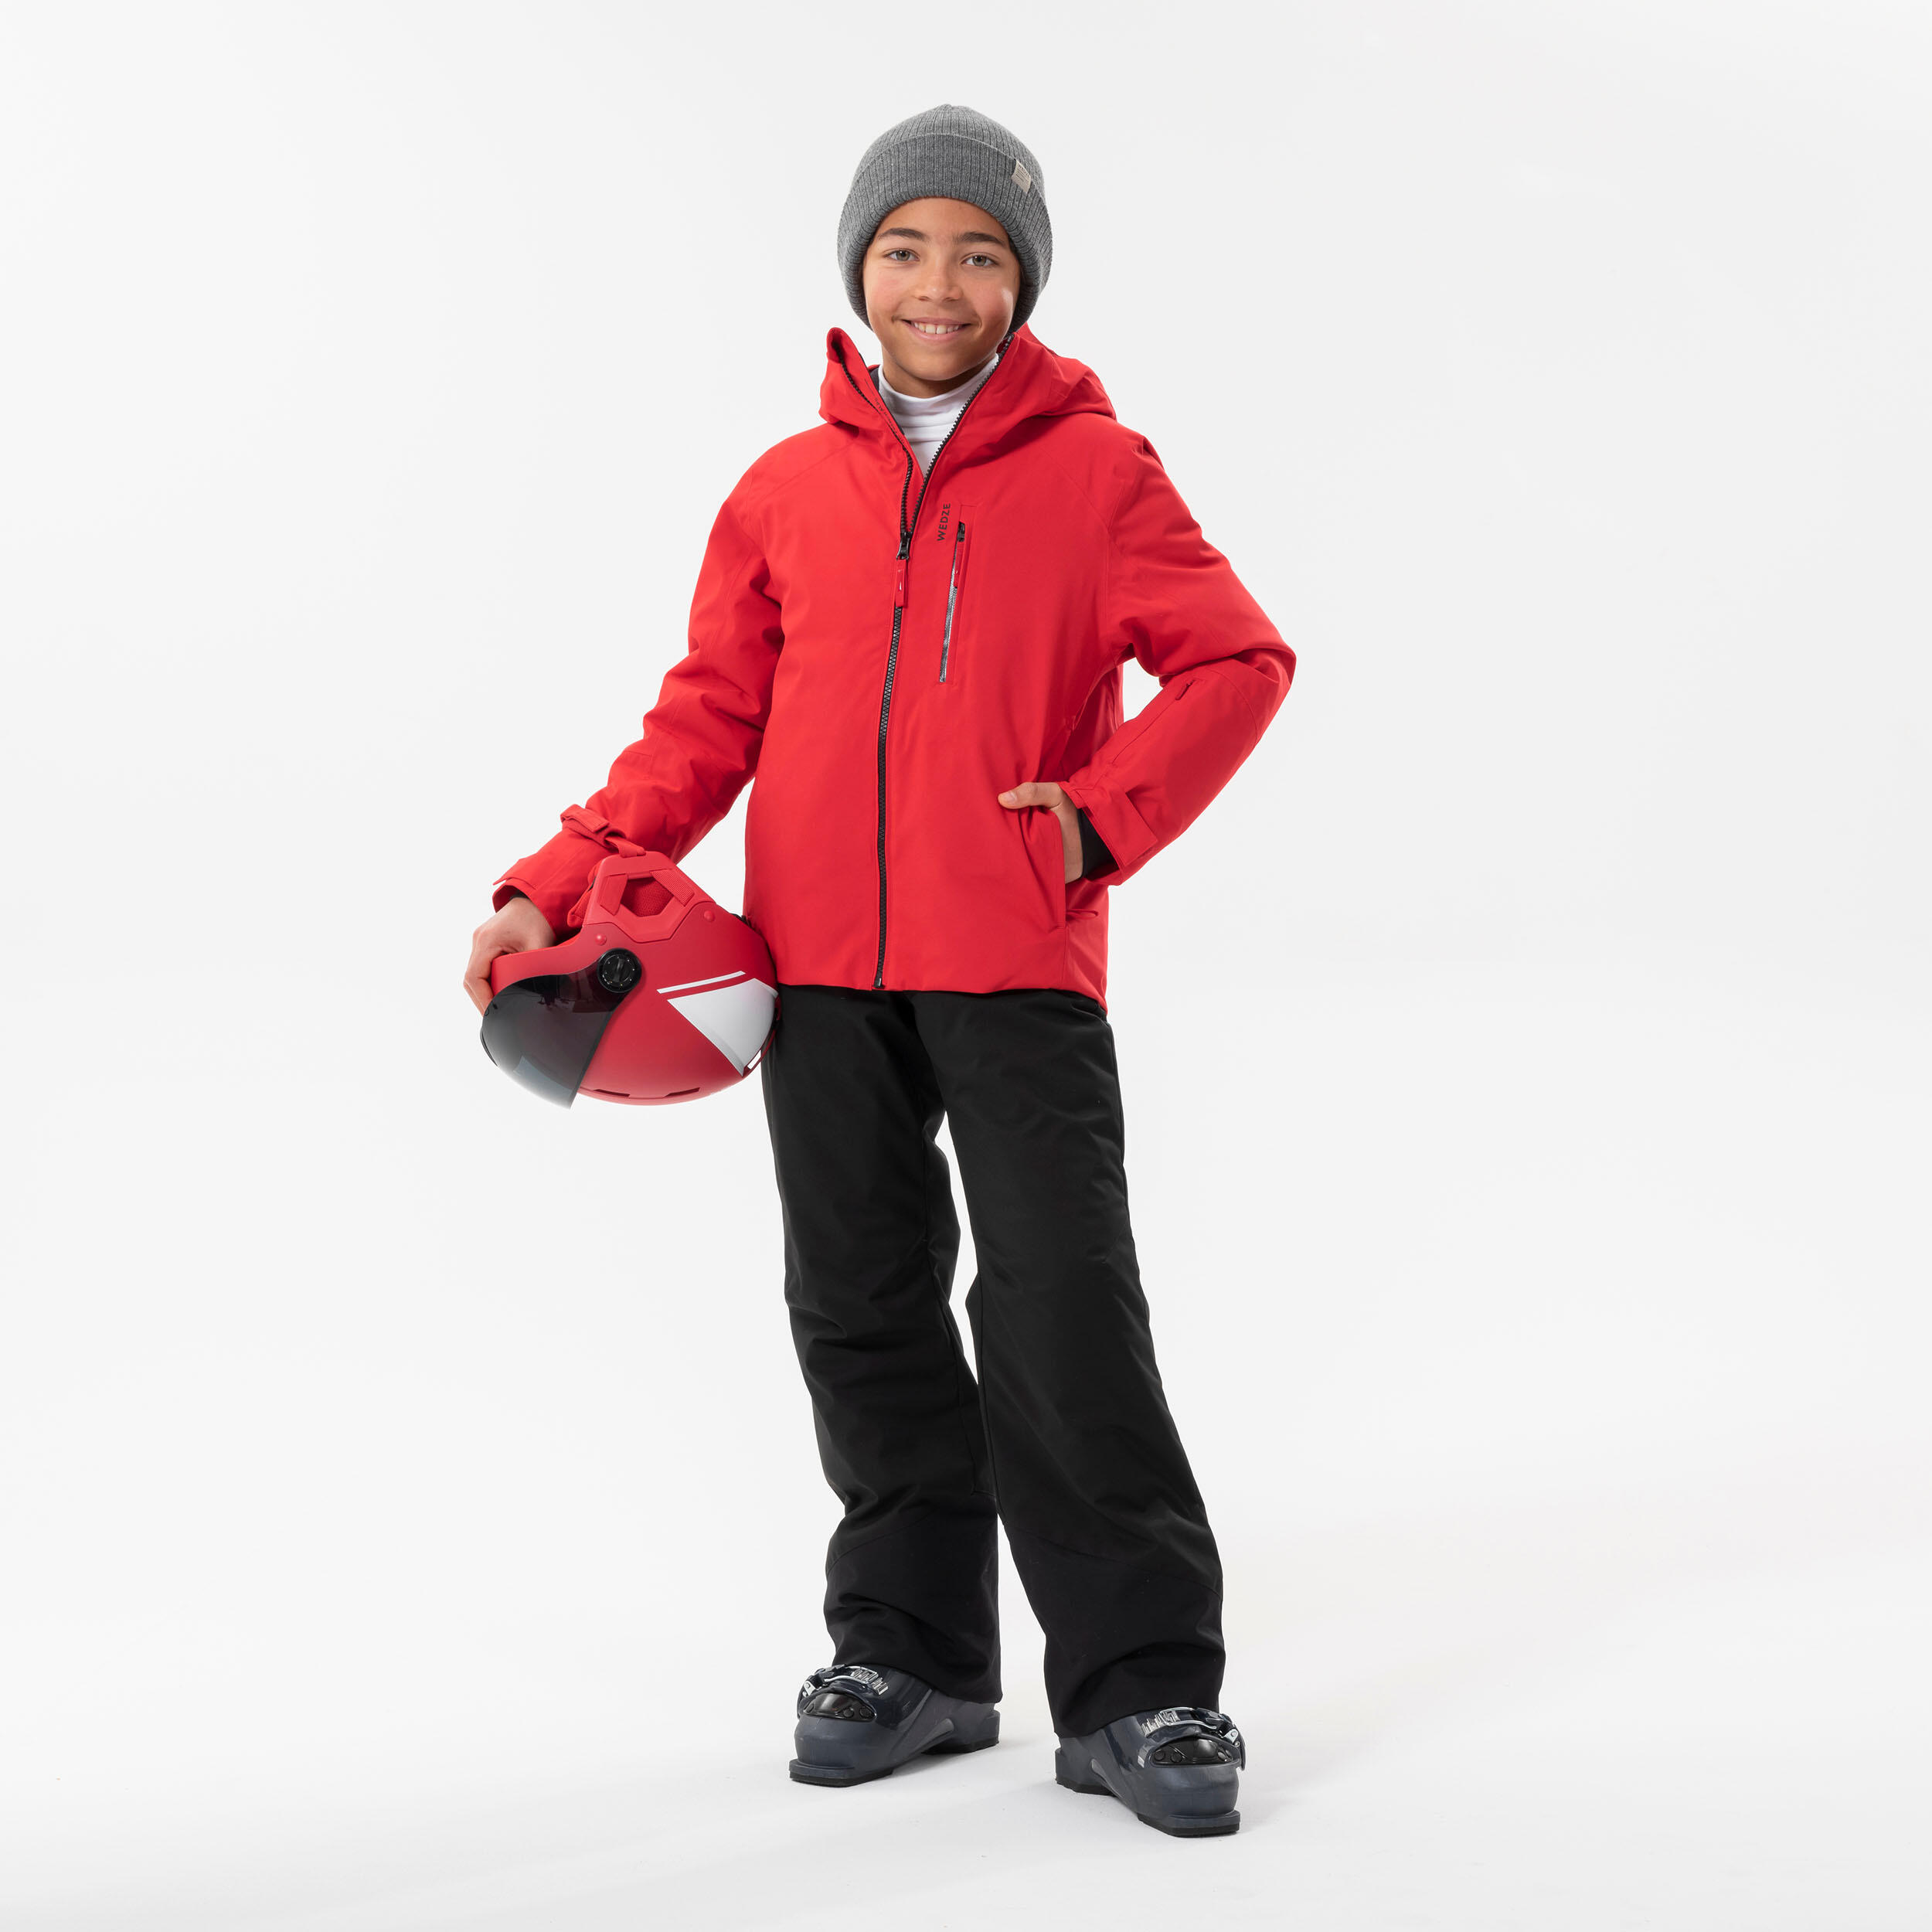 Kids’ Warm and Waterproof Ski Jacket 550 - Red 5/15